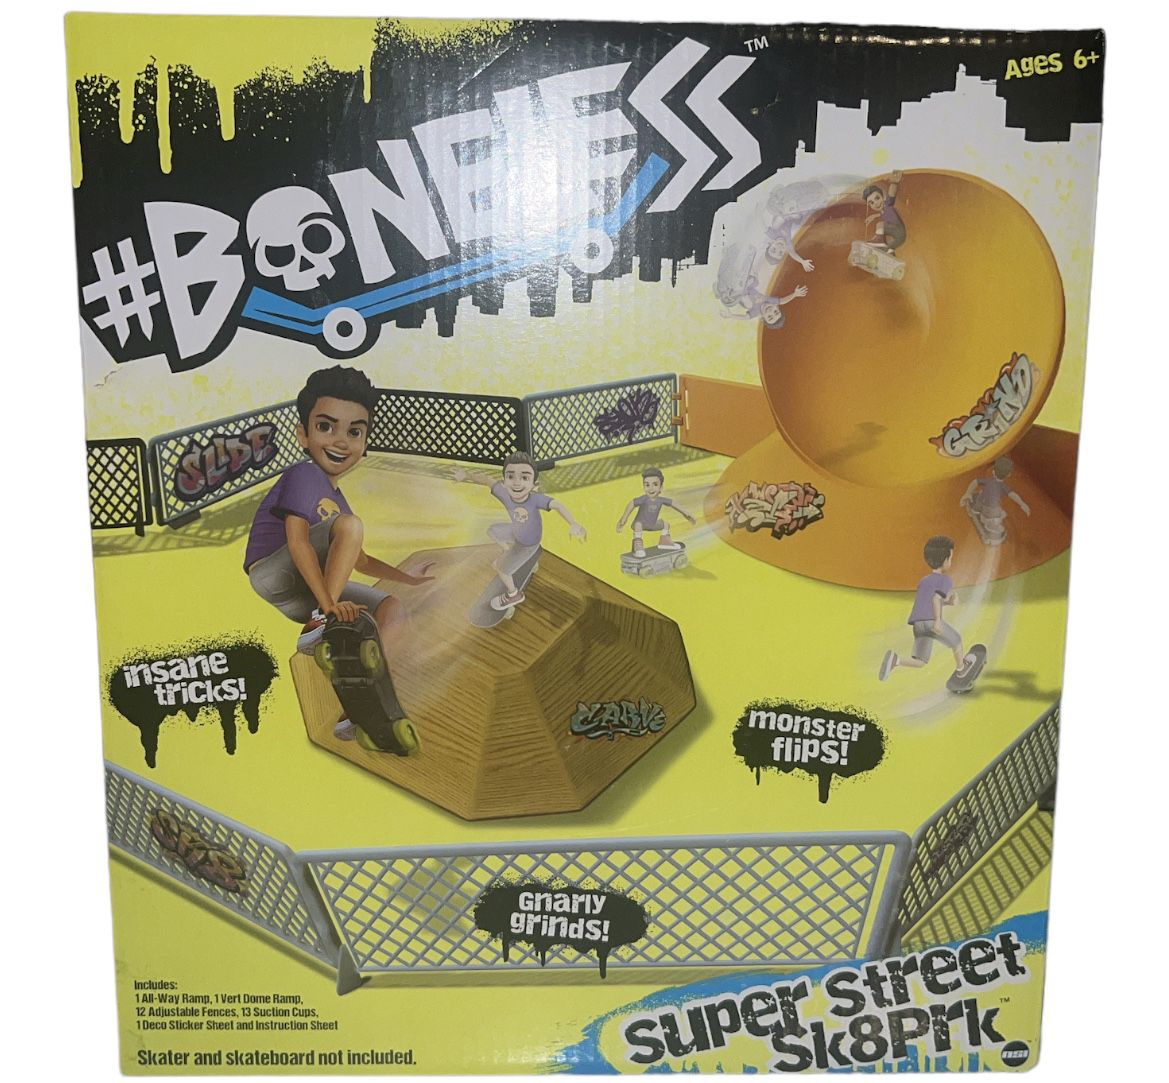 Boneless Super Street sk8prk Ramps